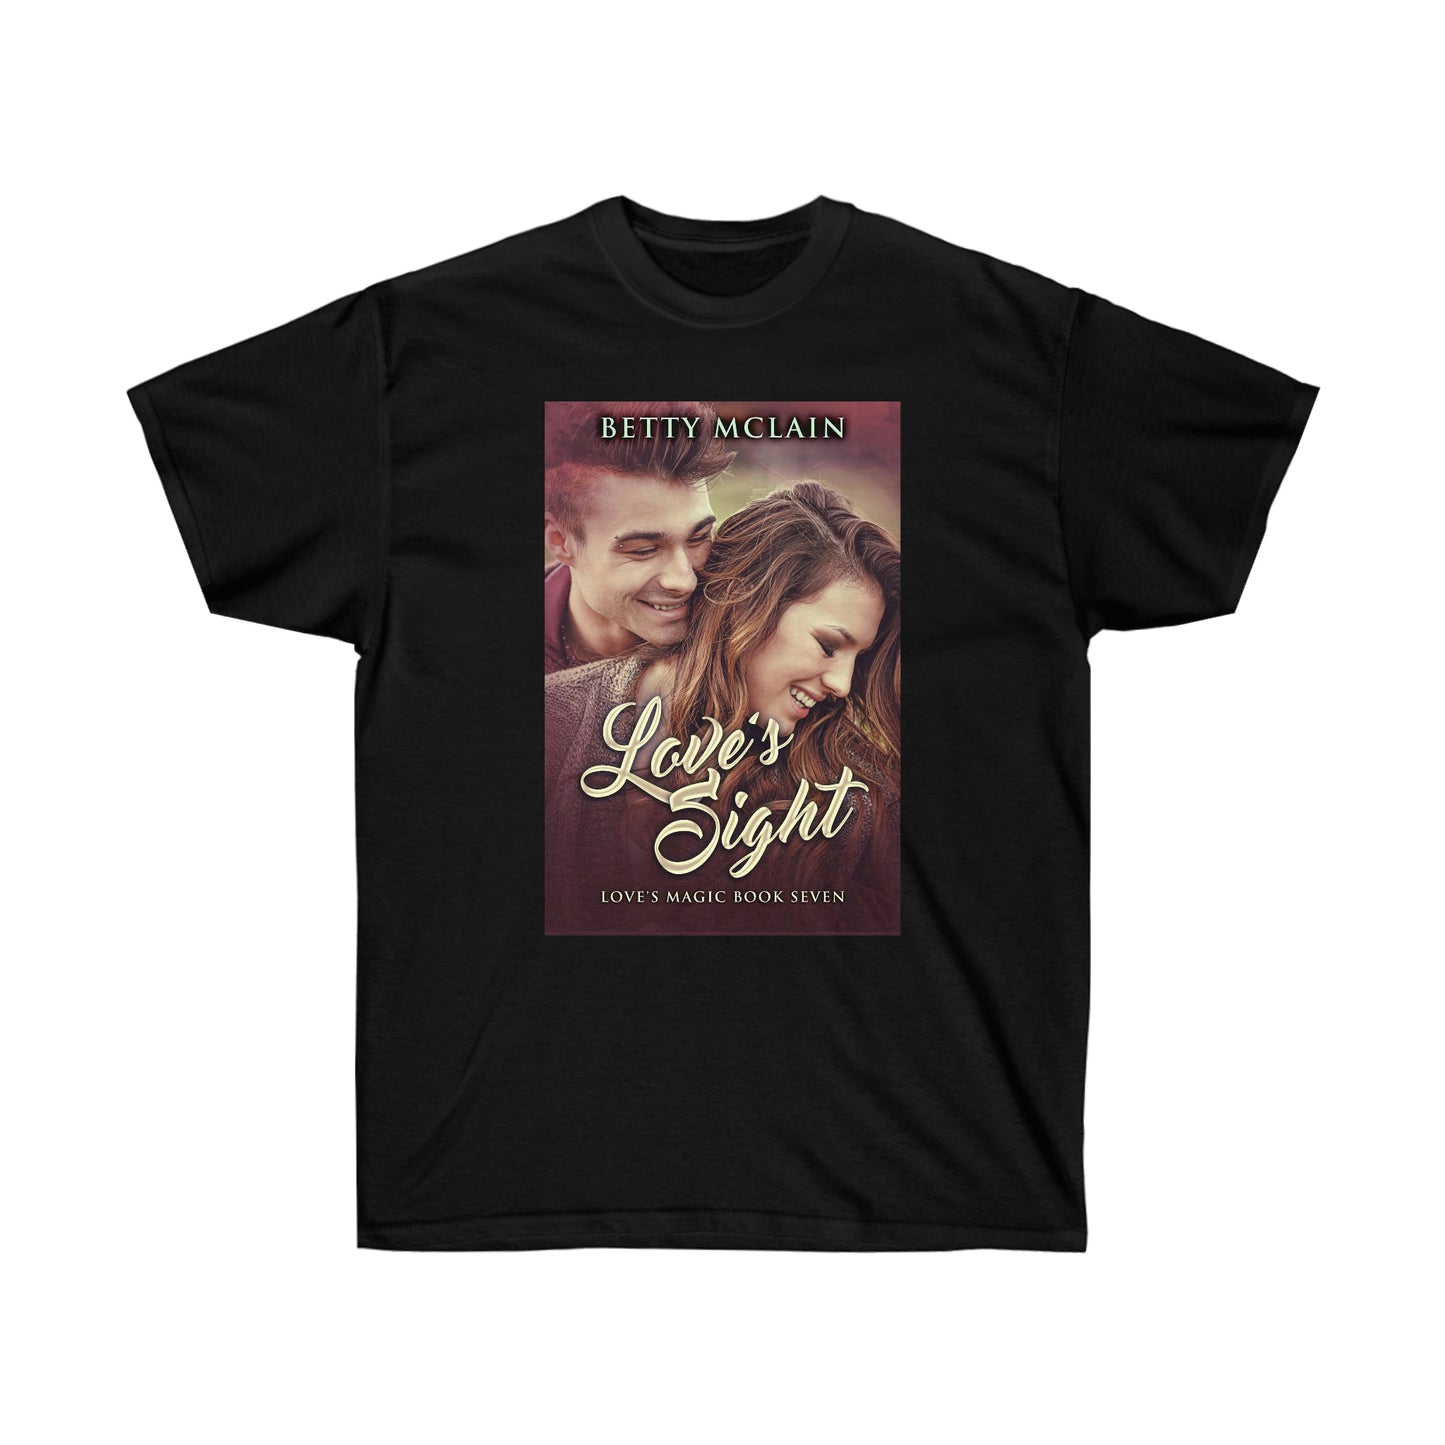 Love's Sight - Unisex T-Shirt